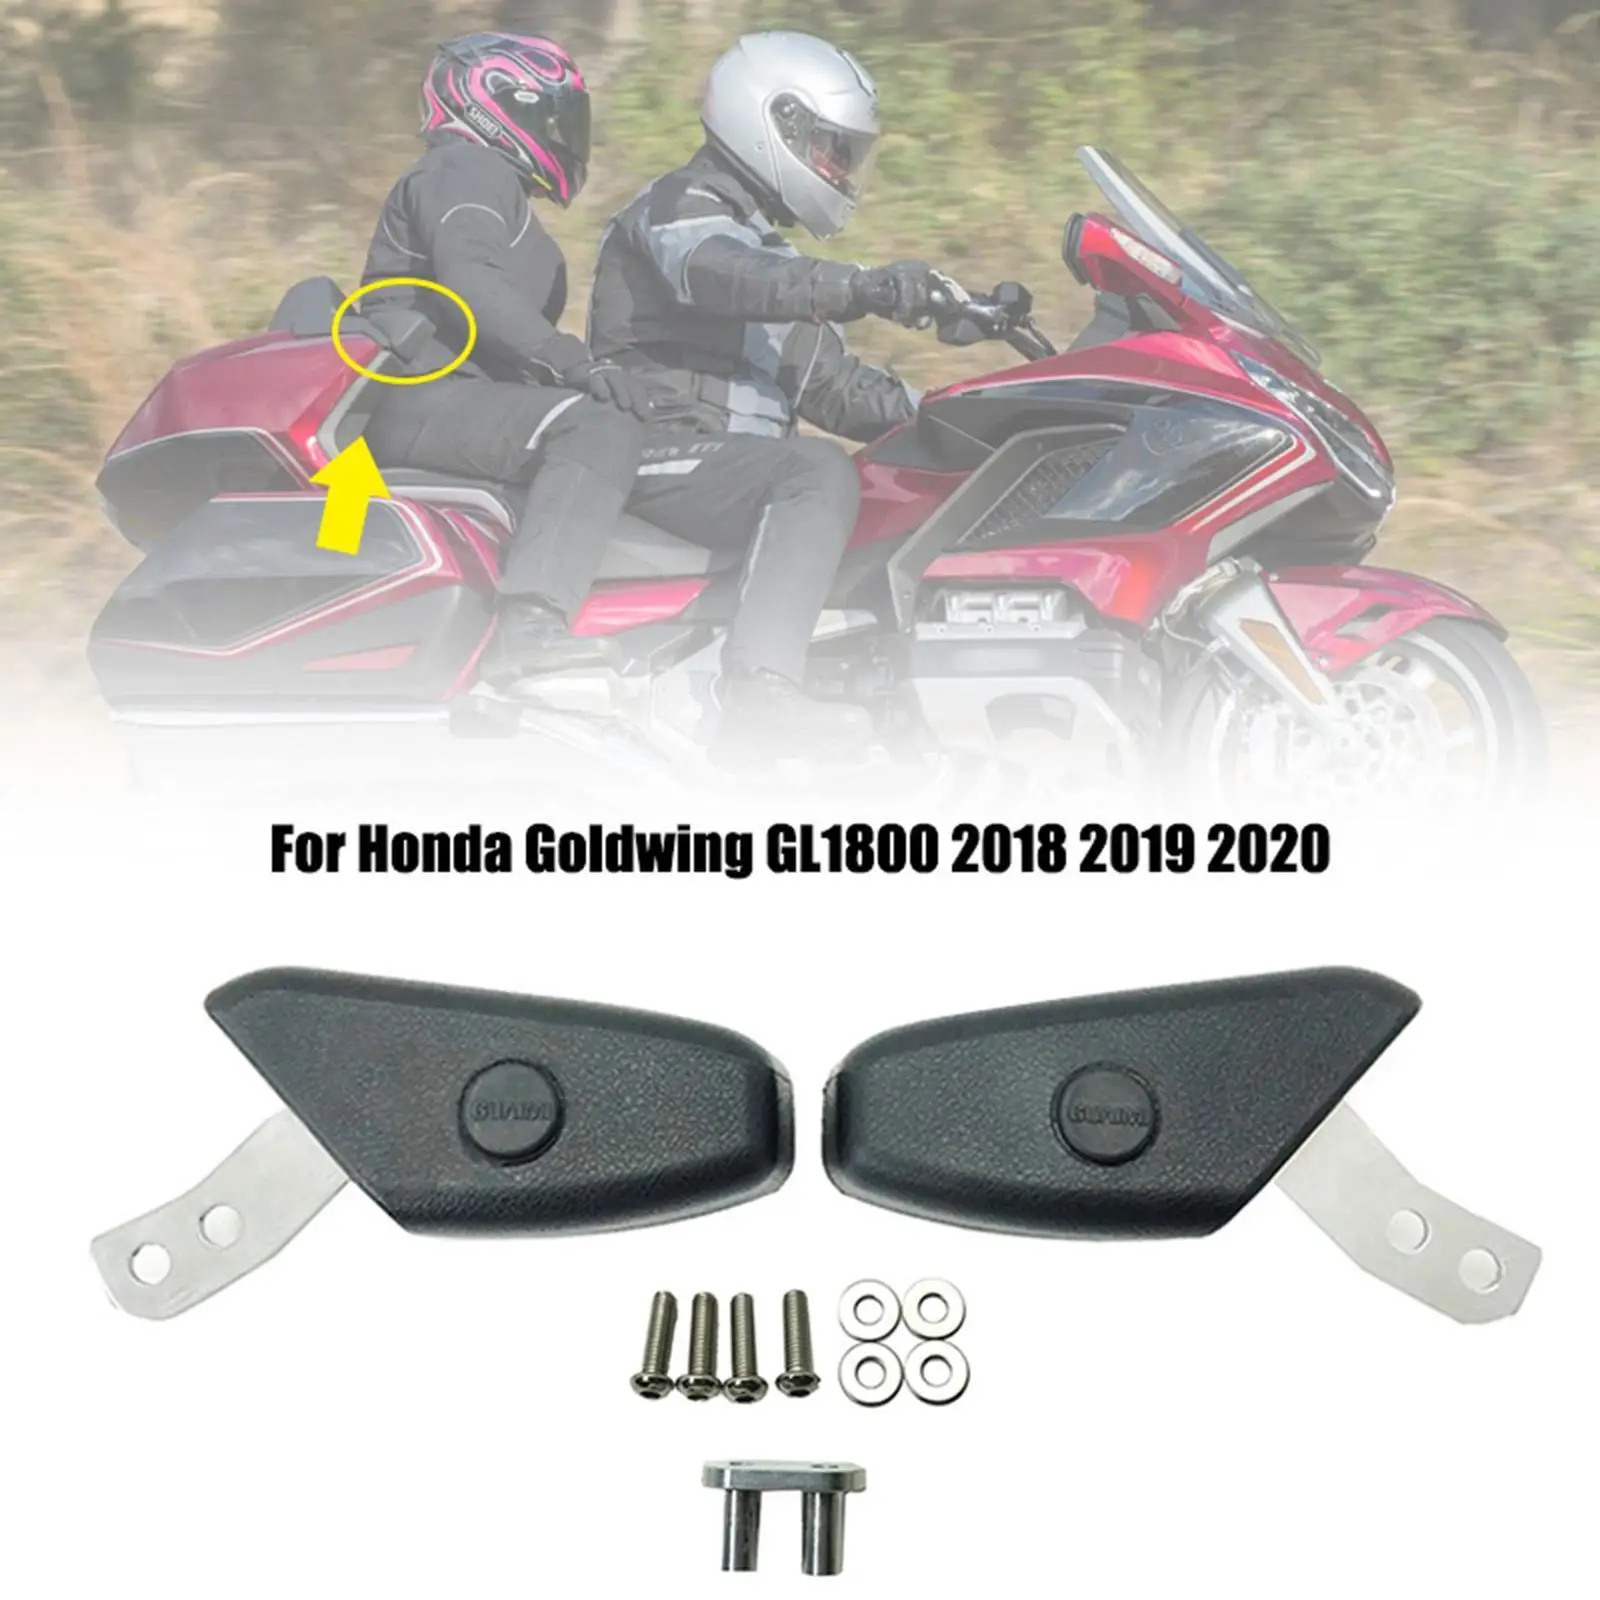 

1Pair Black Motorcycle Rear Passenger Armrests Fit for HONDA Goldwing 1800 GL1800 F6C 2018 2019 2020 Models, durable rubber